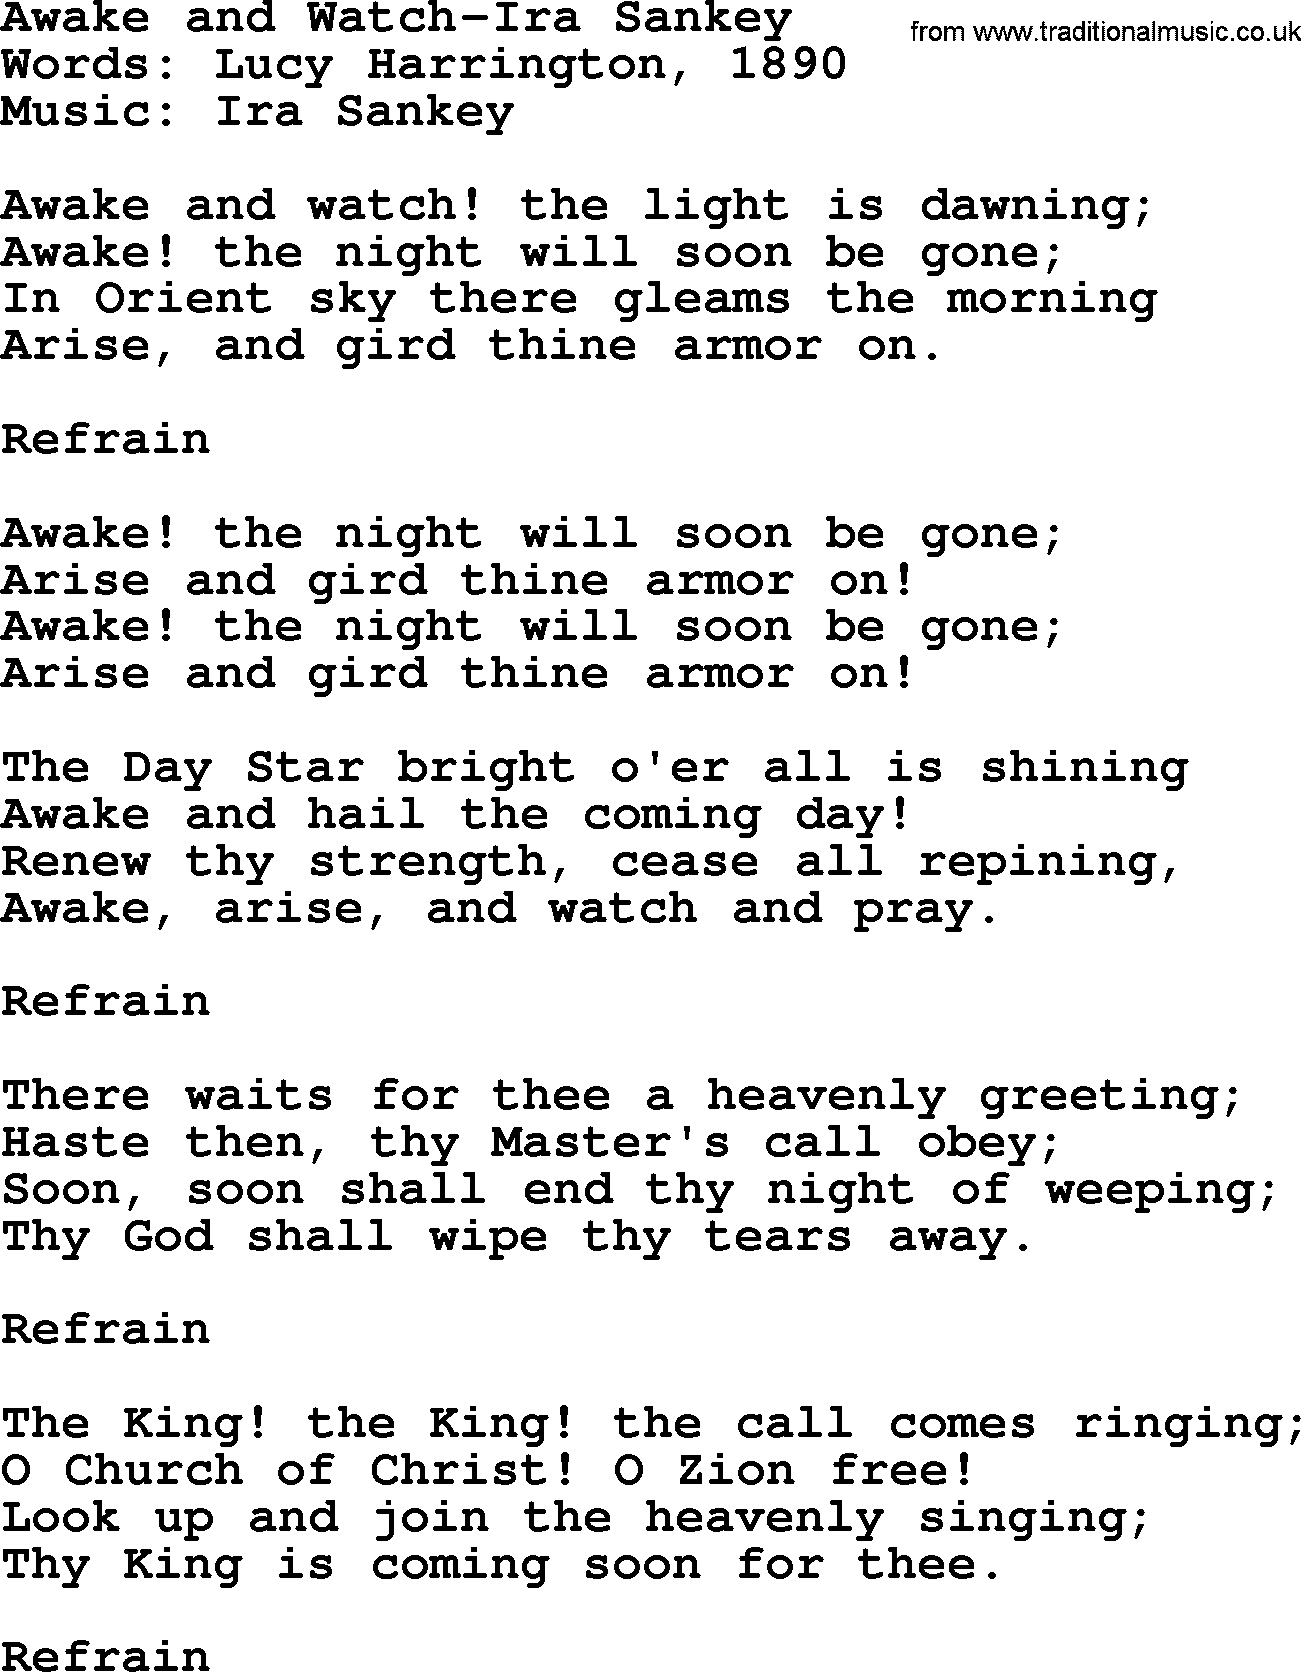 Ira Sankey hymn: Awake and Watch-Ira Sankey, lyrics